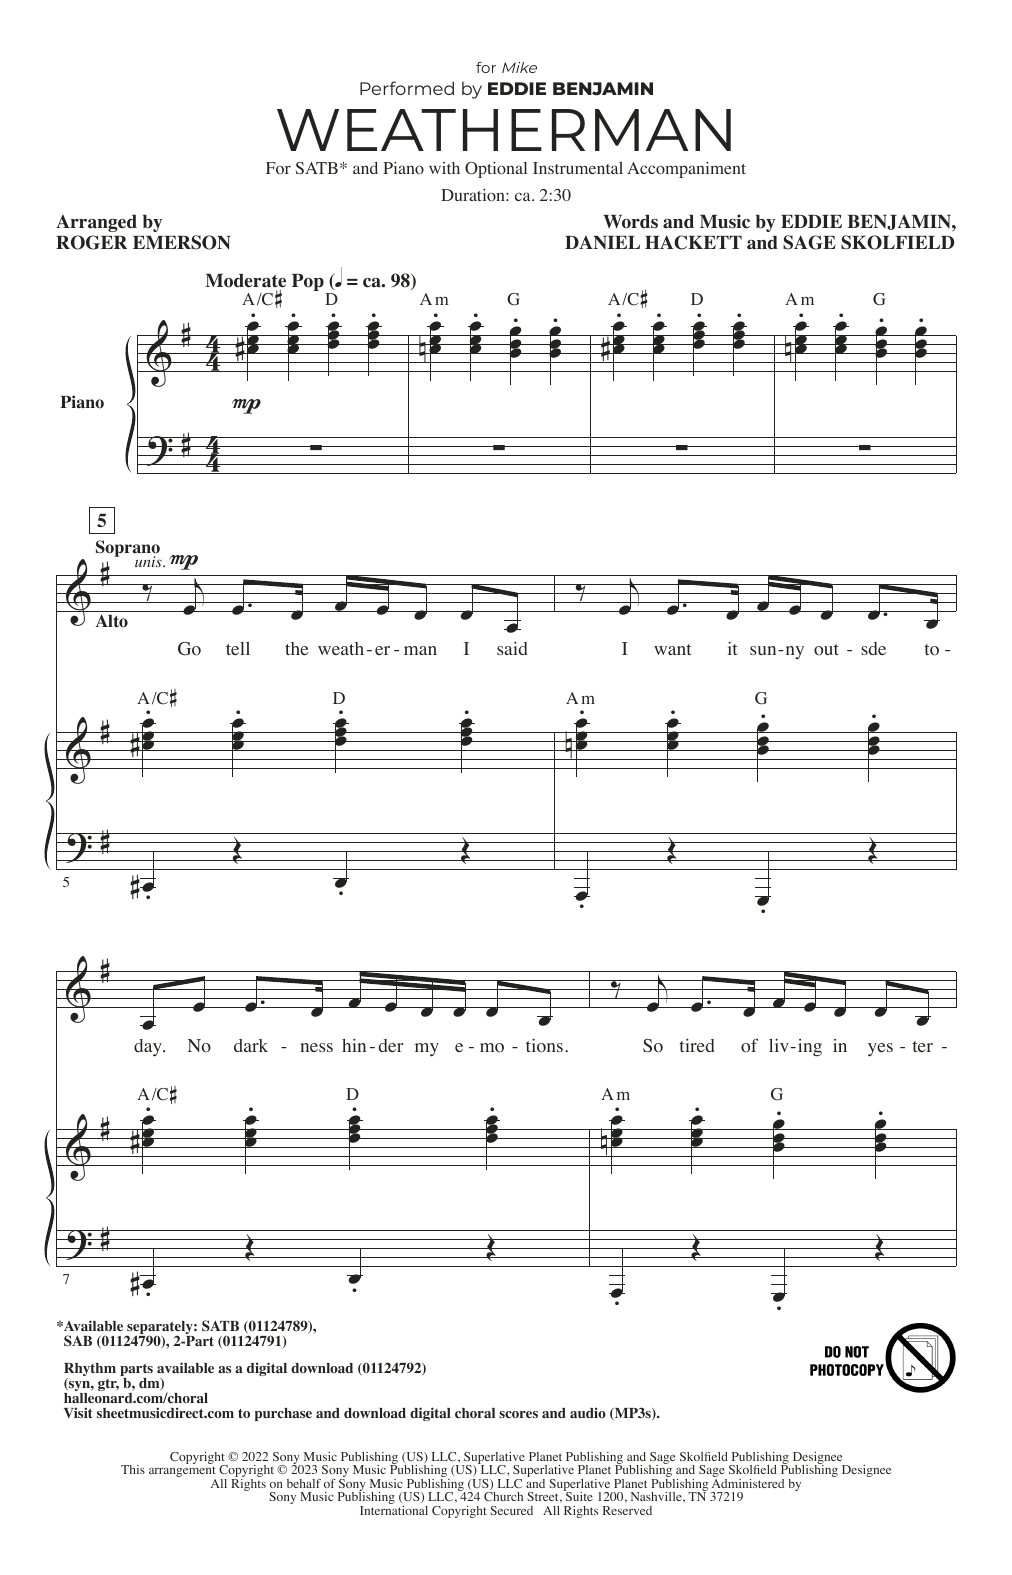 Eddie Benjamin Weatherman (arr. Roger Emerson) sheet music notes and chords arranged for SAB Choir